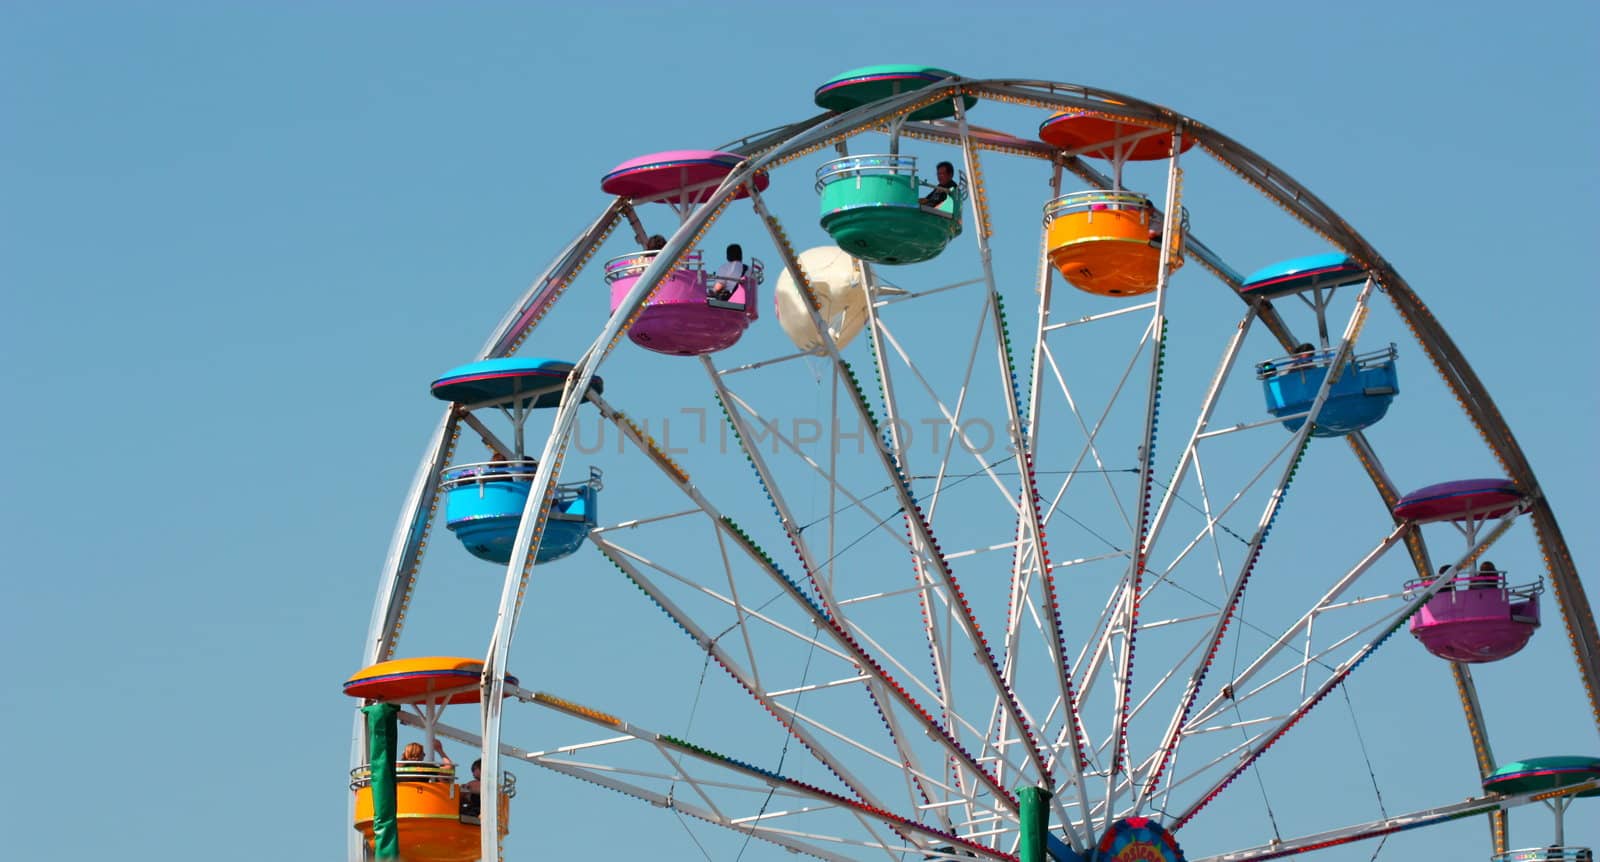 Ferris wheel ride at amusement park, colorful against a clear blue sky